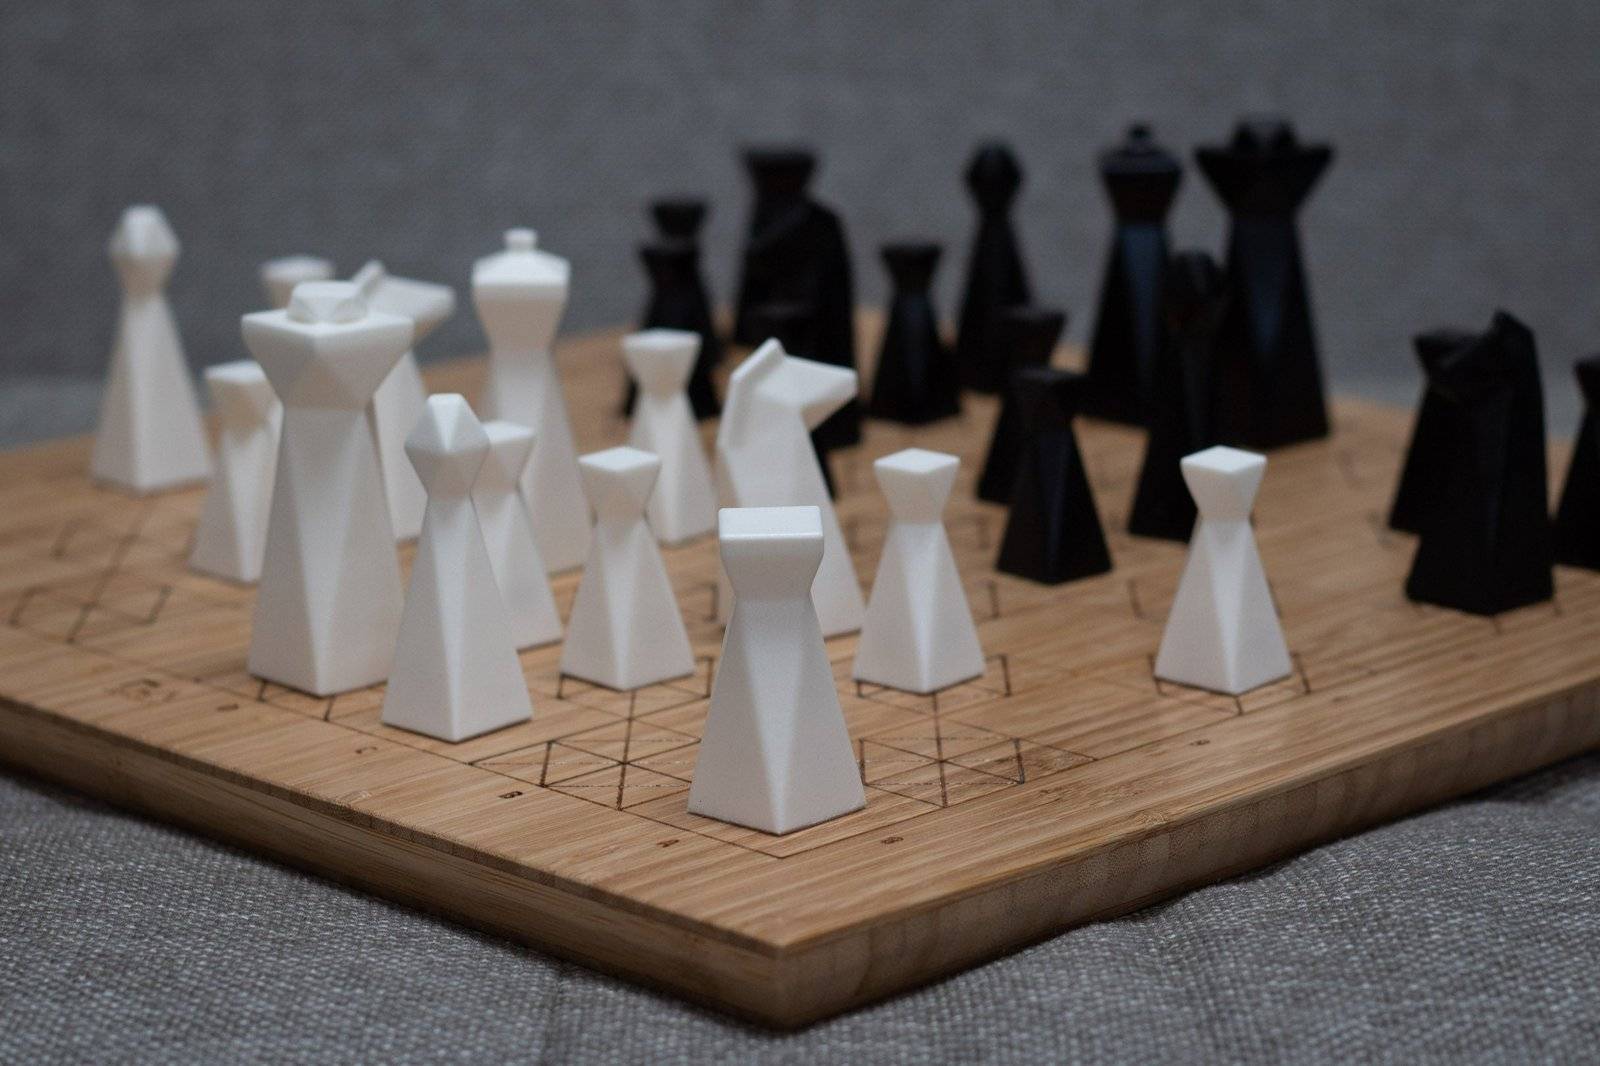 chess pieces design